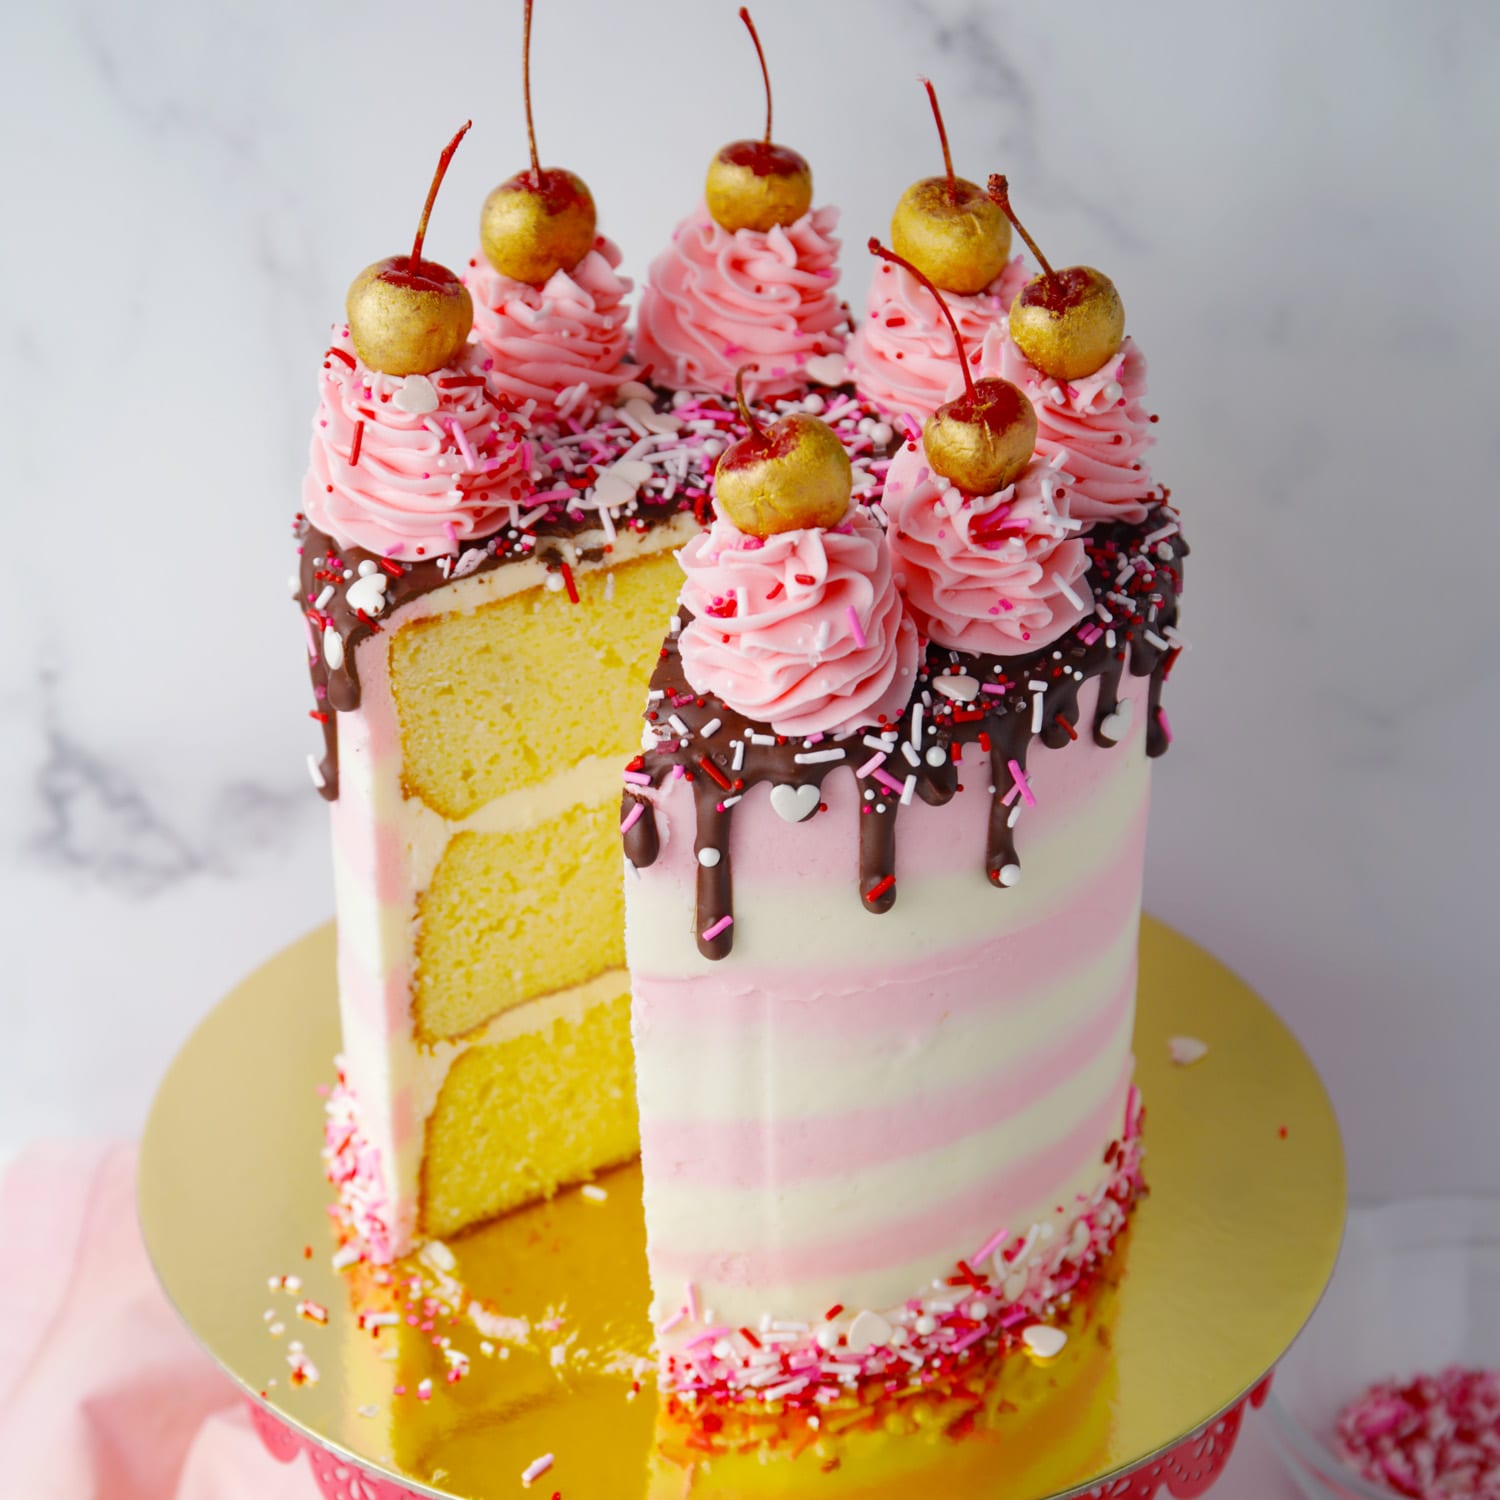 Vintage Wilton Revolving Cake Stand Cake Decorating Made Easy - 11